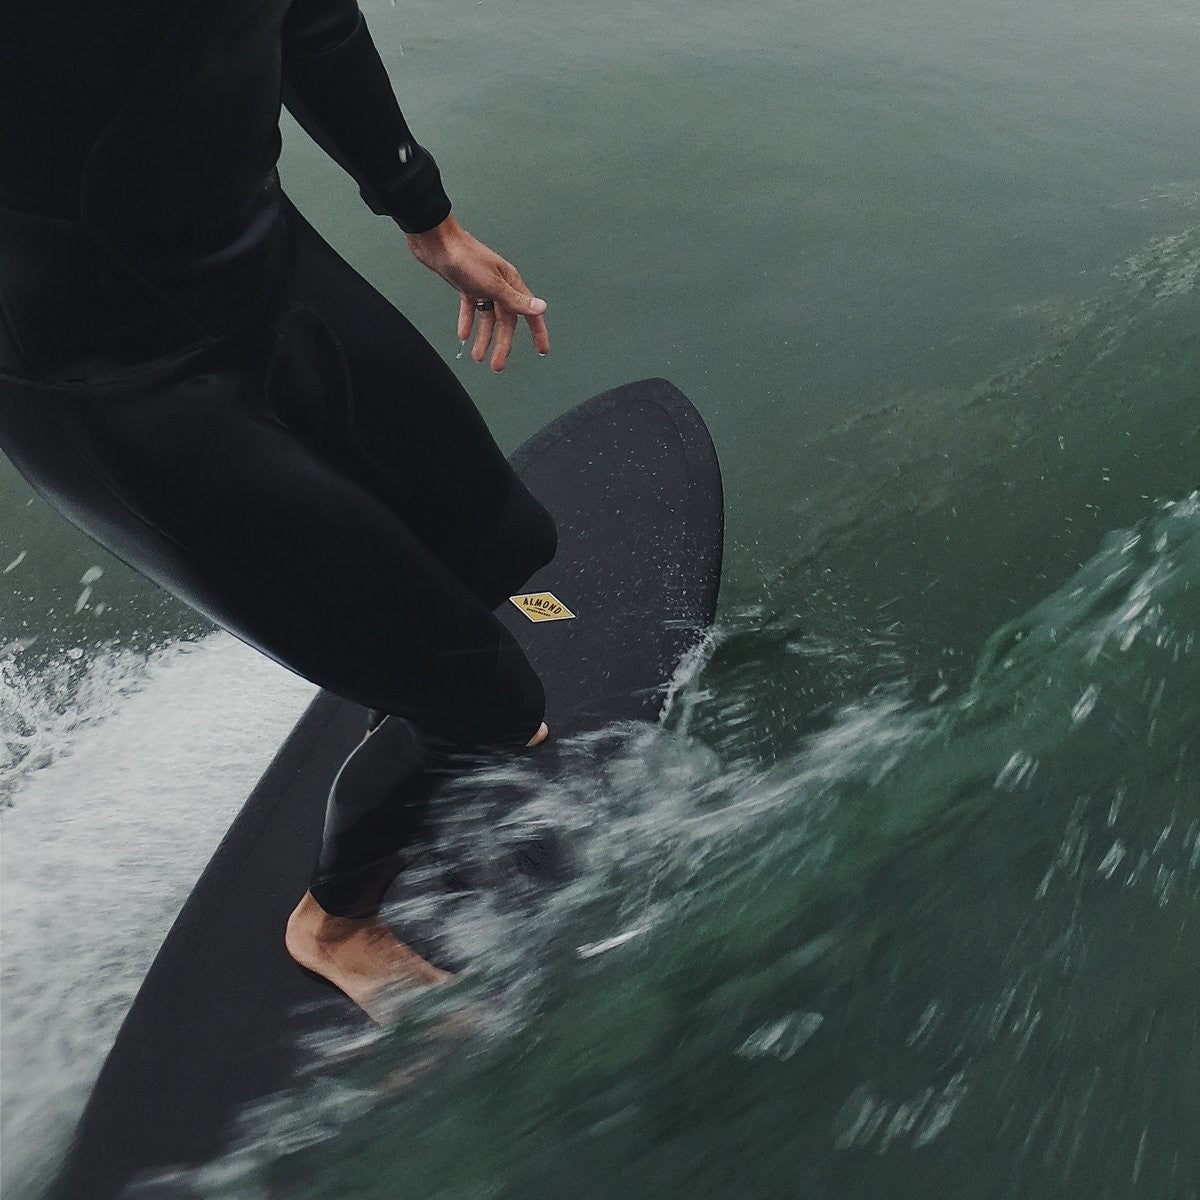 ALMOND Surfboards - R-Series 6'4 - Black